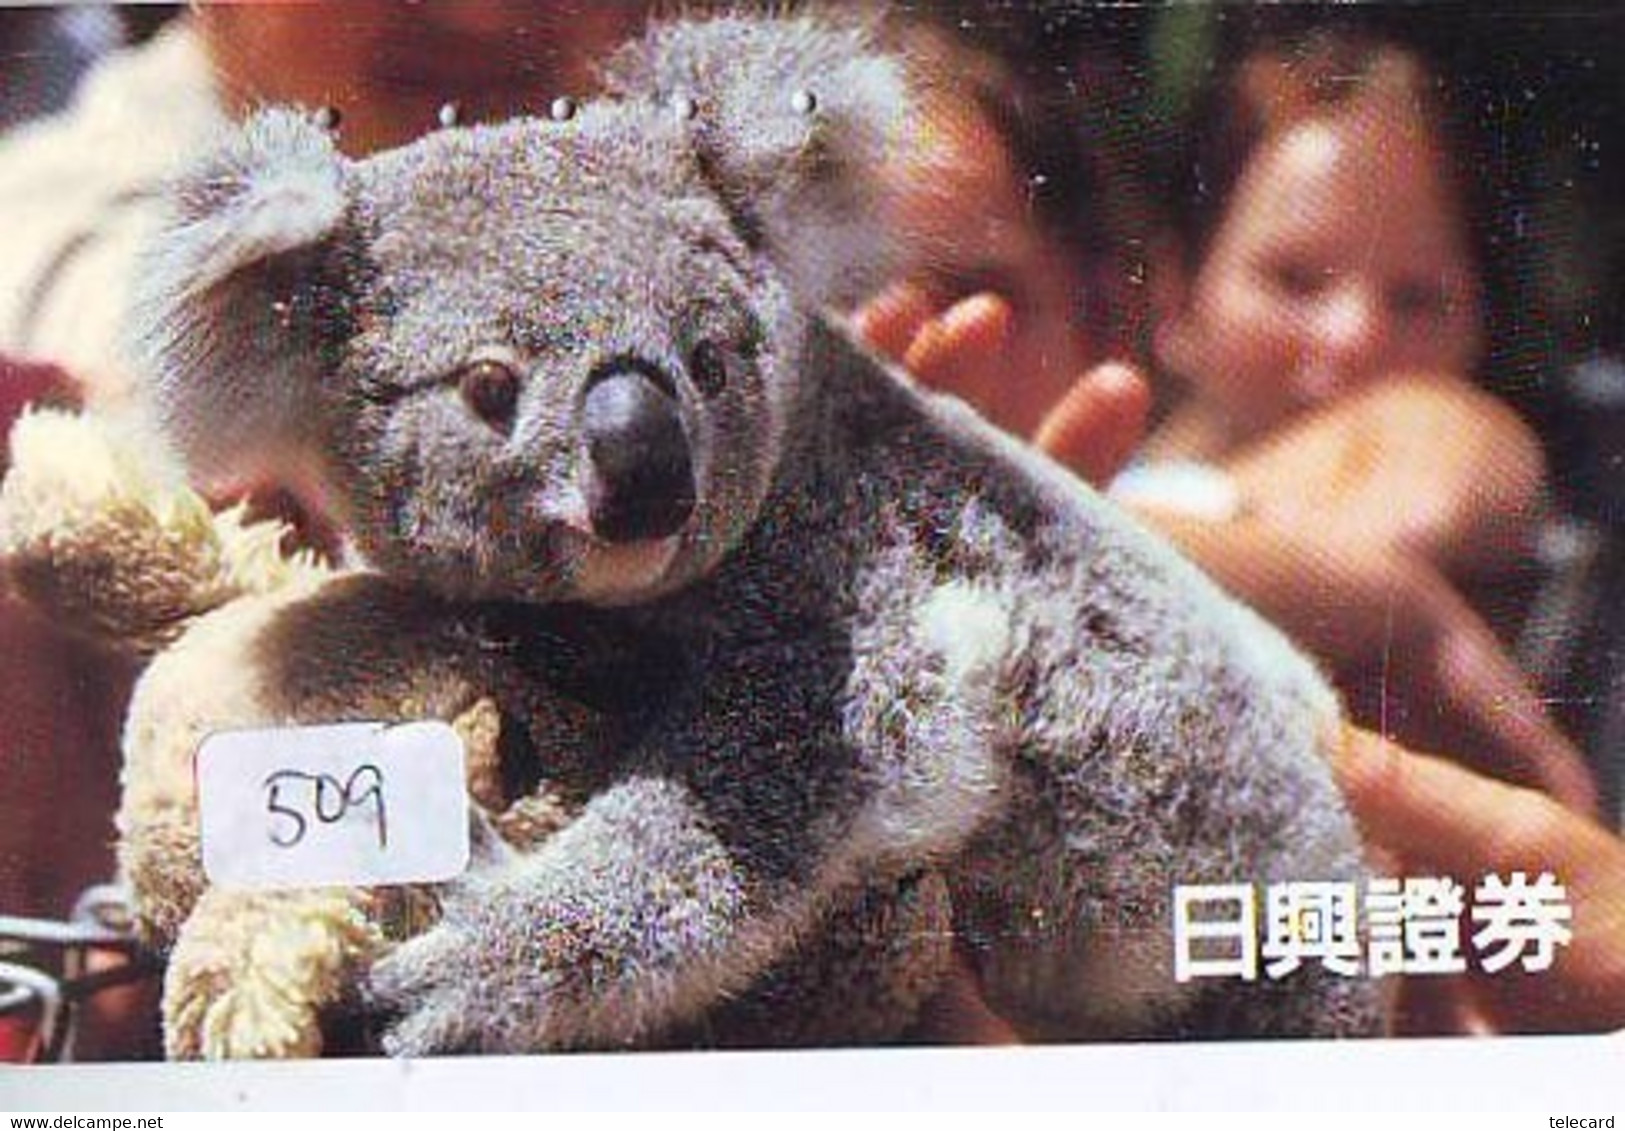 Telecarte Japon * KOALA * BEAR * Koalabär (509) * PHONECARD JAPAN ANIMAL * TIER TELEFONKARTE - Dschungel